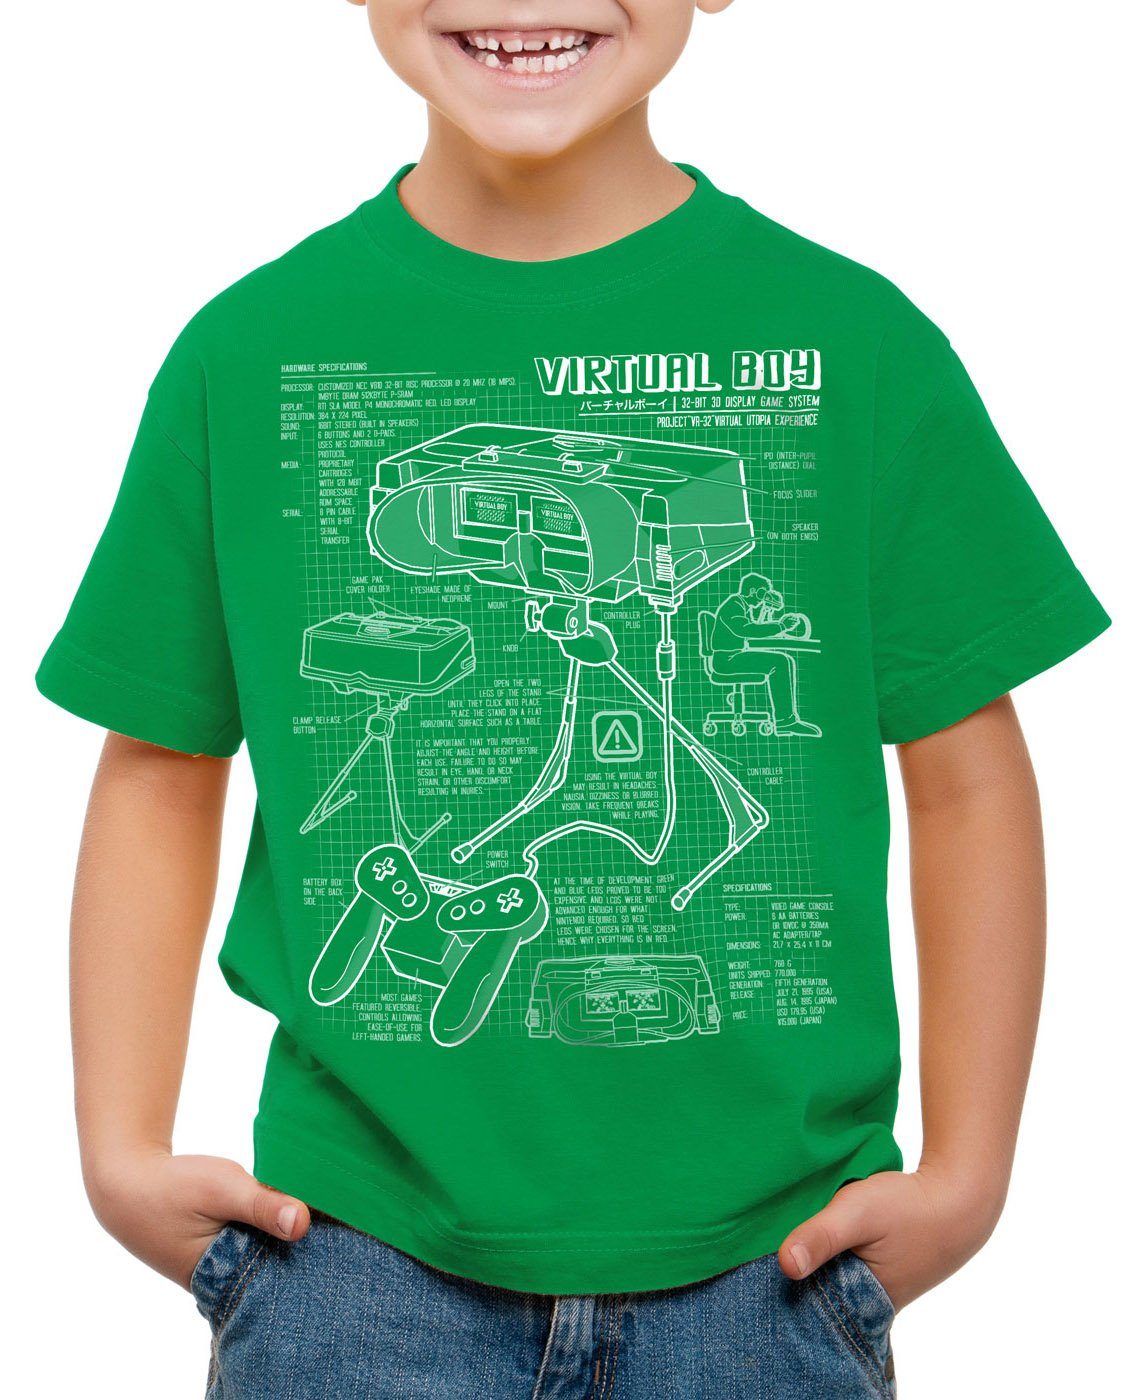 videospiel Boy style3 Kinder T-Shirt 32-Bit controller Blaupause grün Print-Shirt Virtual